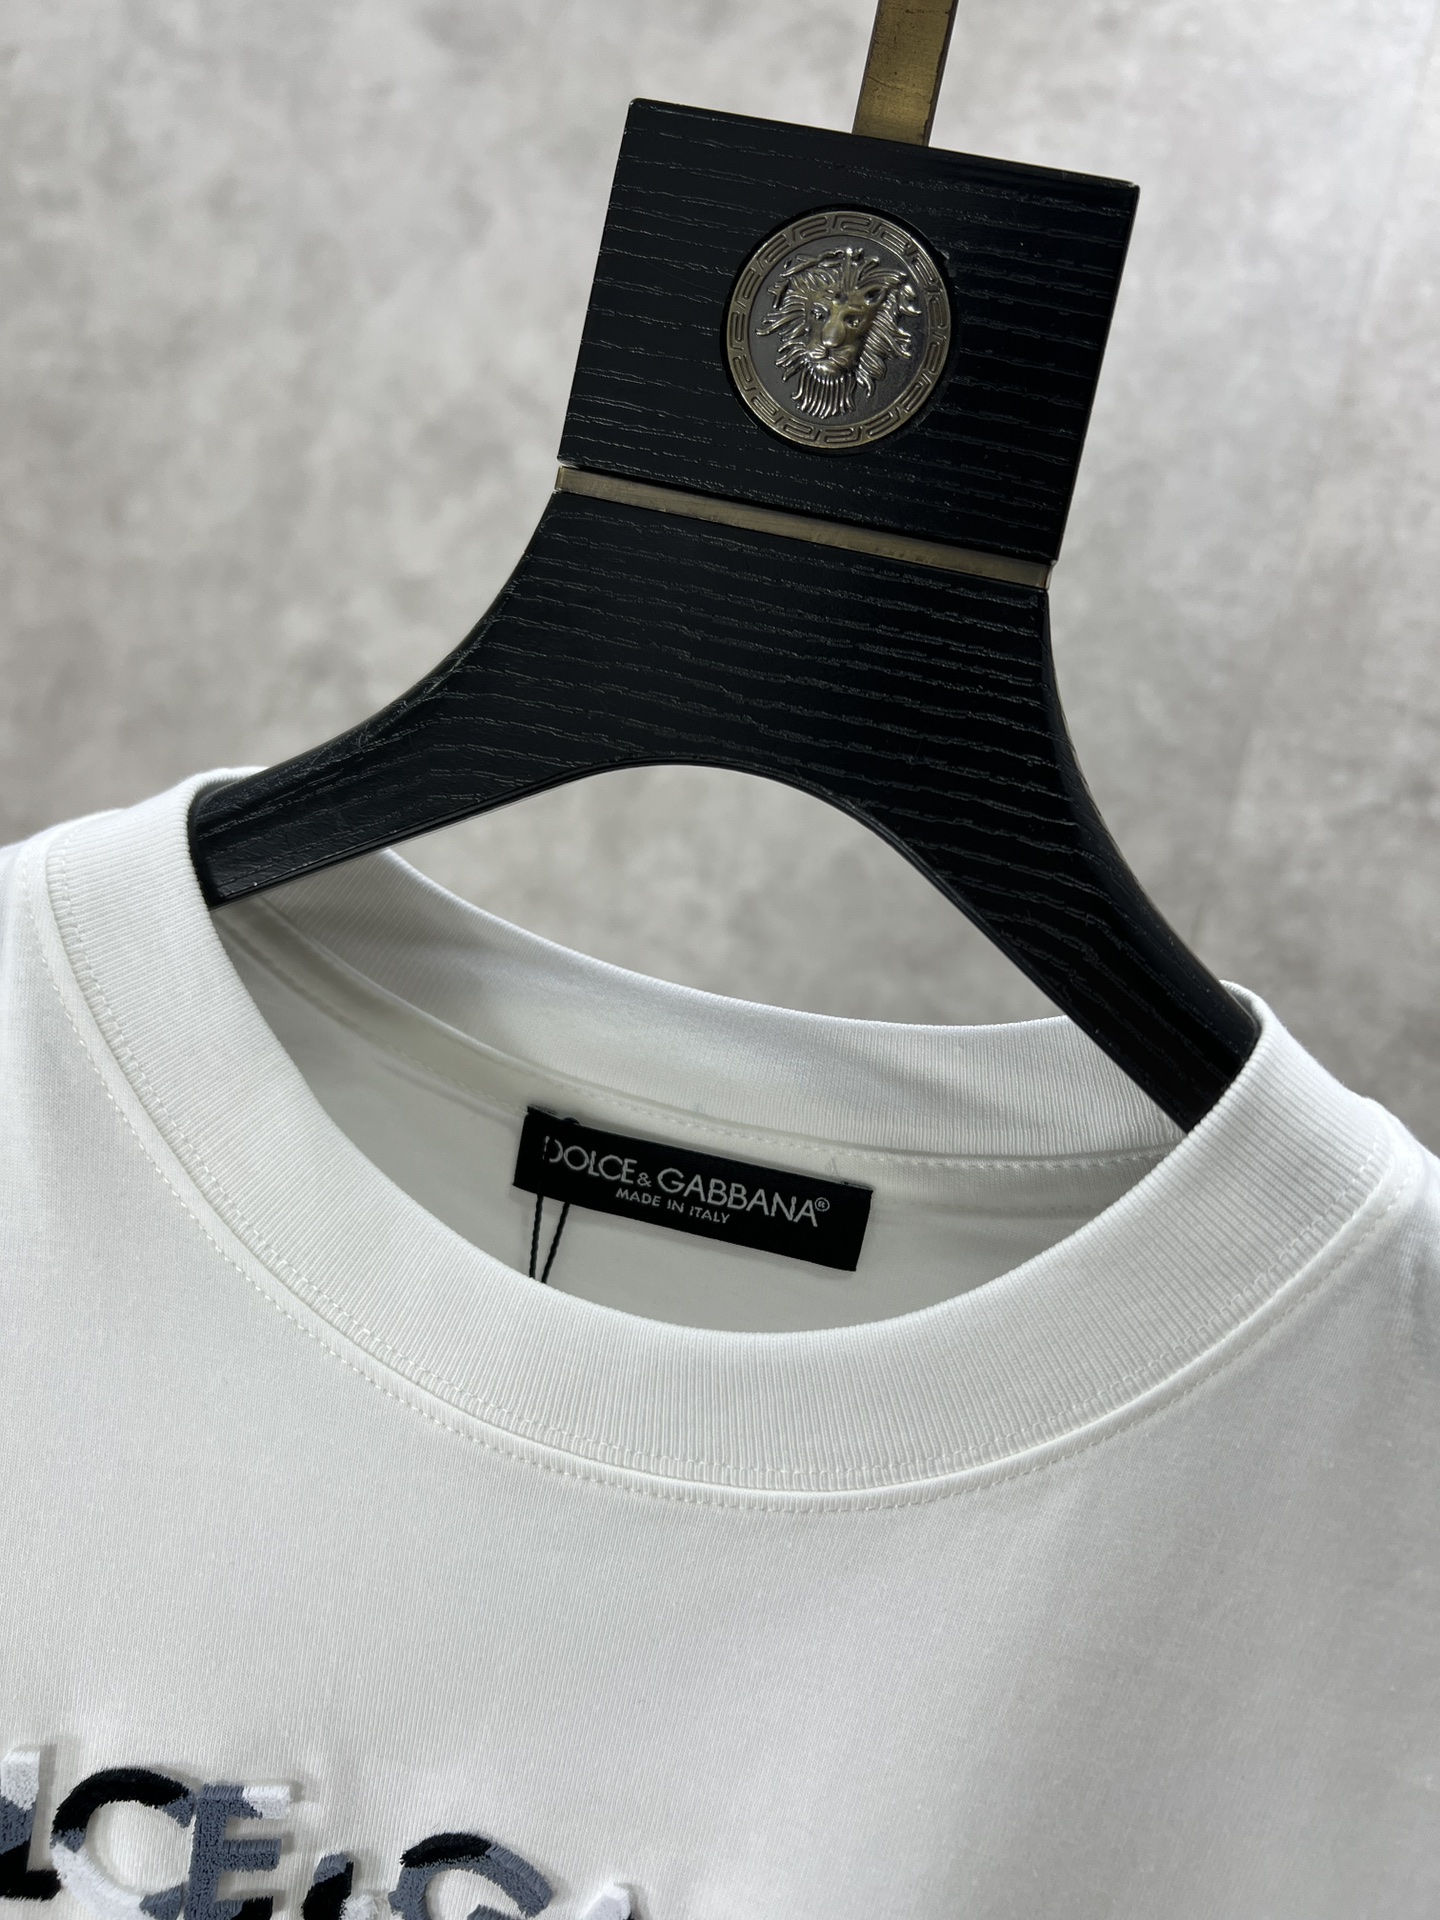 DG2024Ss最新款短袖T恤原标定制面料手感柔软穿着舒适做工精细.上身效果无敌帅气L码数S-2xl